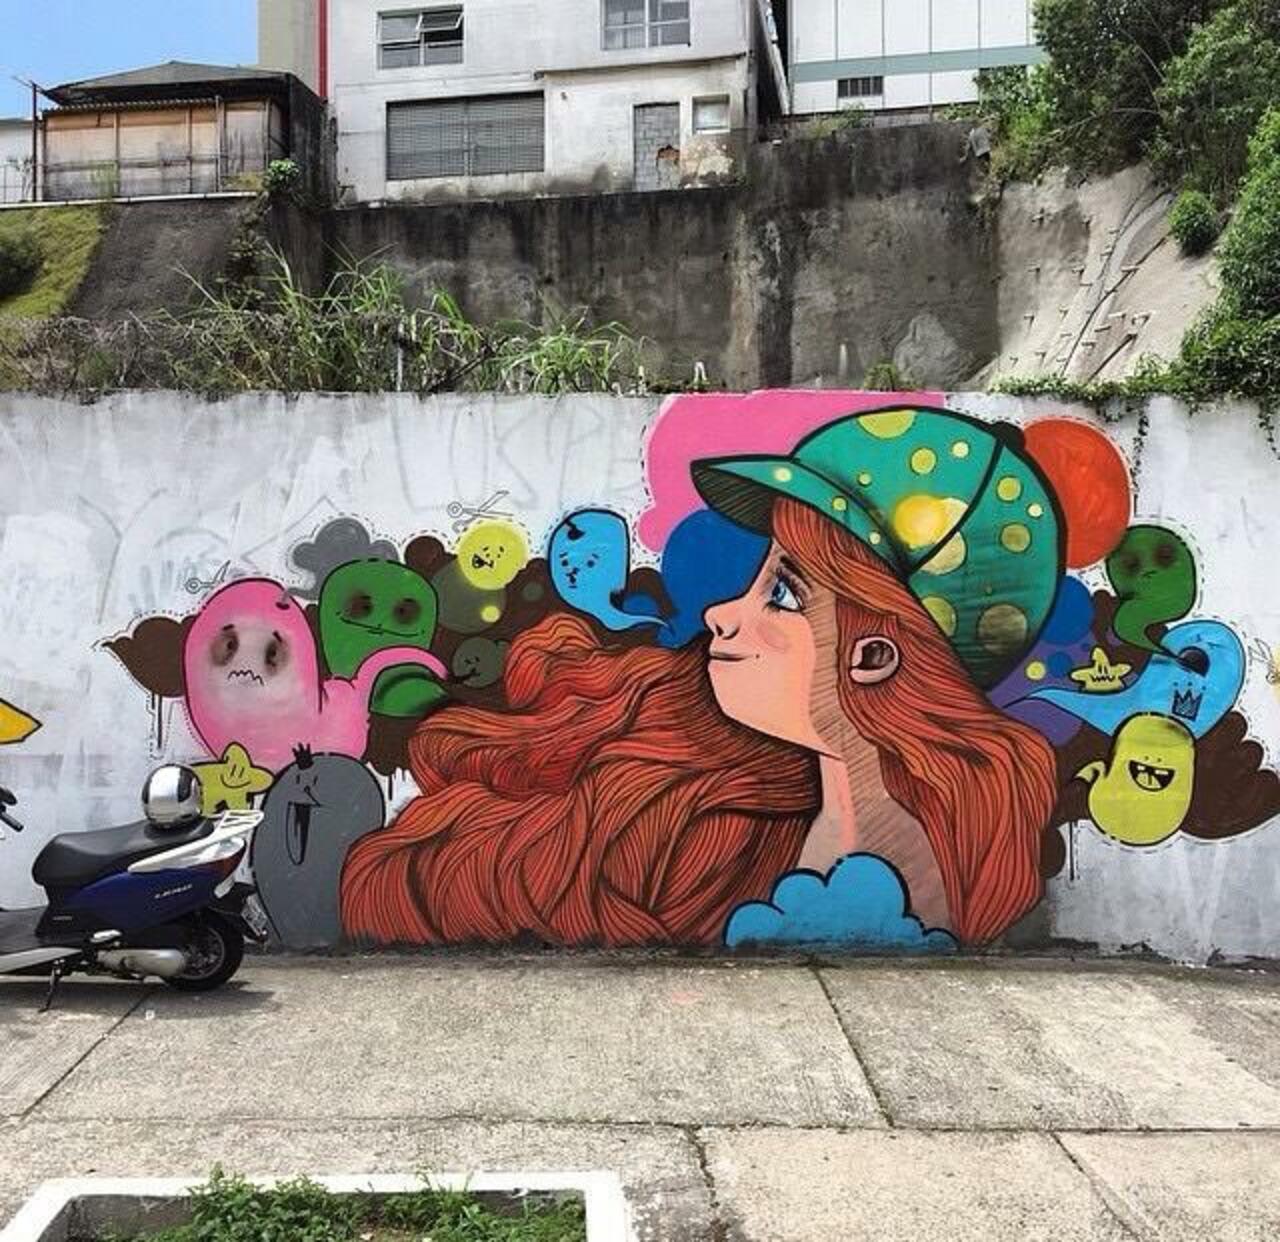 Endearing Street Art by Vupulos in São Paulo, Brazil 

#art #mural #graffiti #streetart http://t.co/LQP8JqegfM